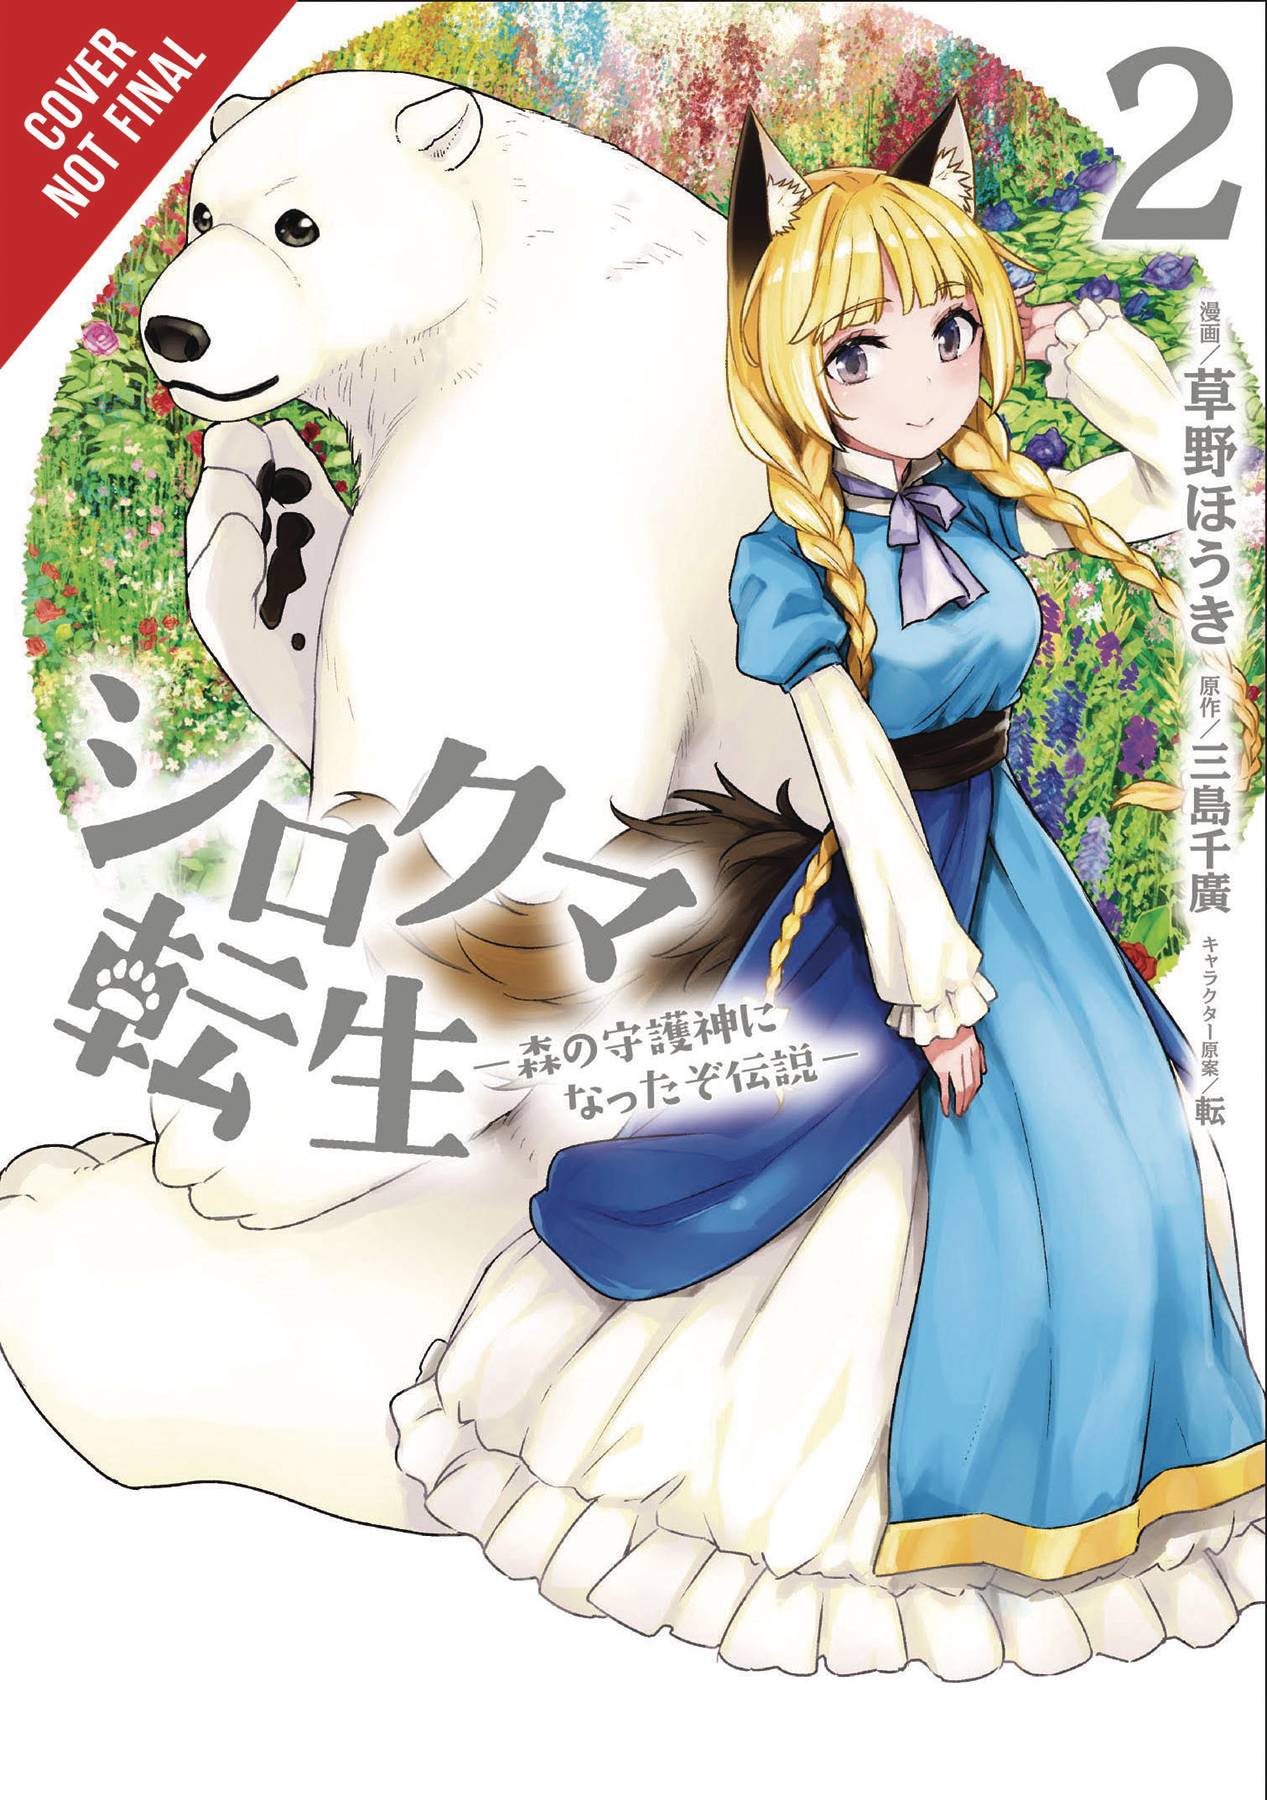 Reborn As Polar Bear Legend How Forest Guardian Manga Volume 2